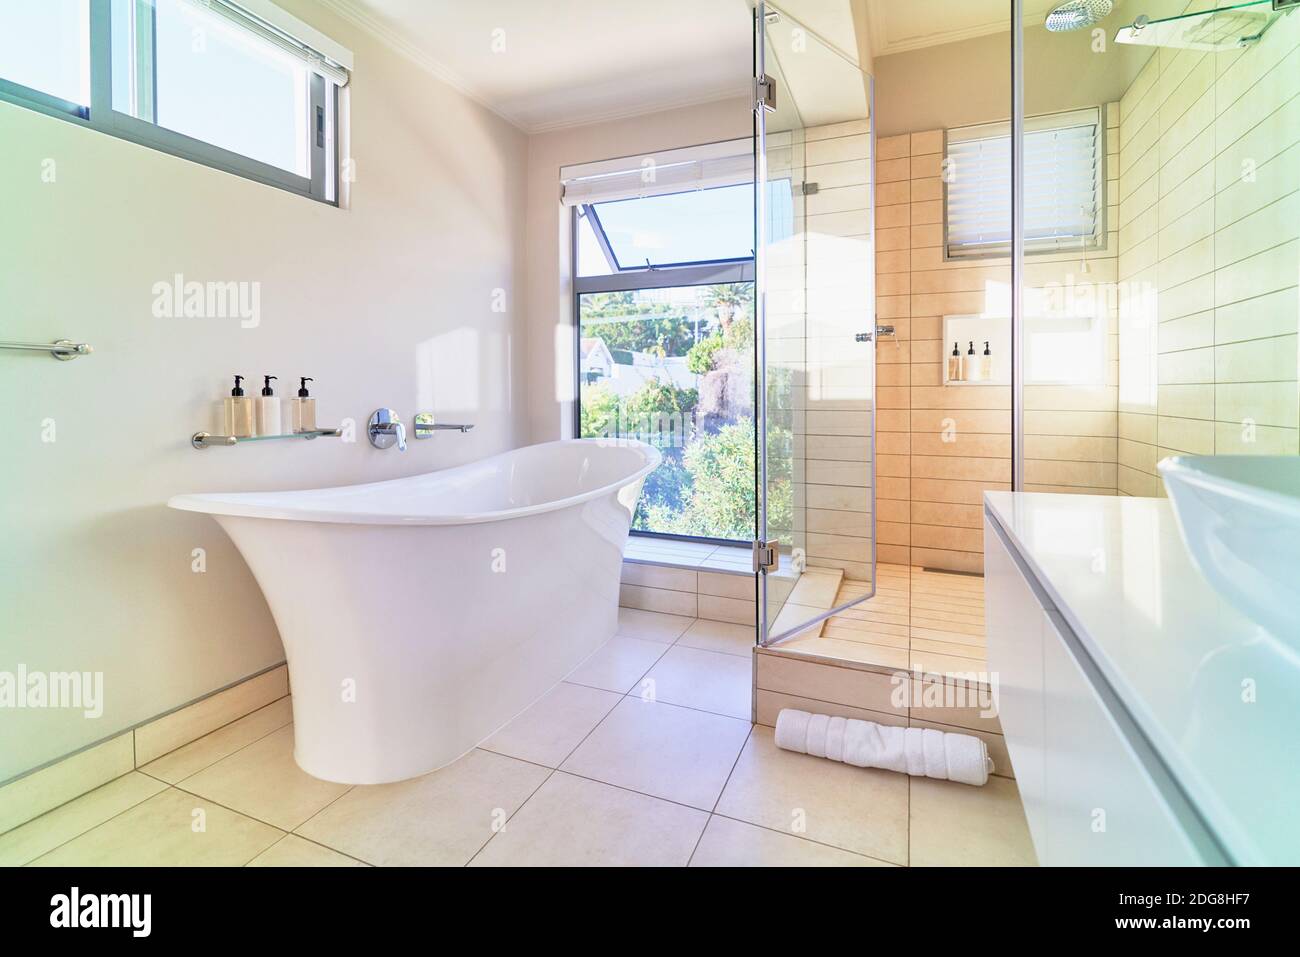 Modern home showcase interior bathroom with white soaking tub Stock Photo